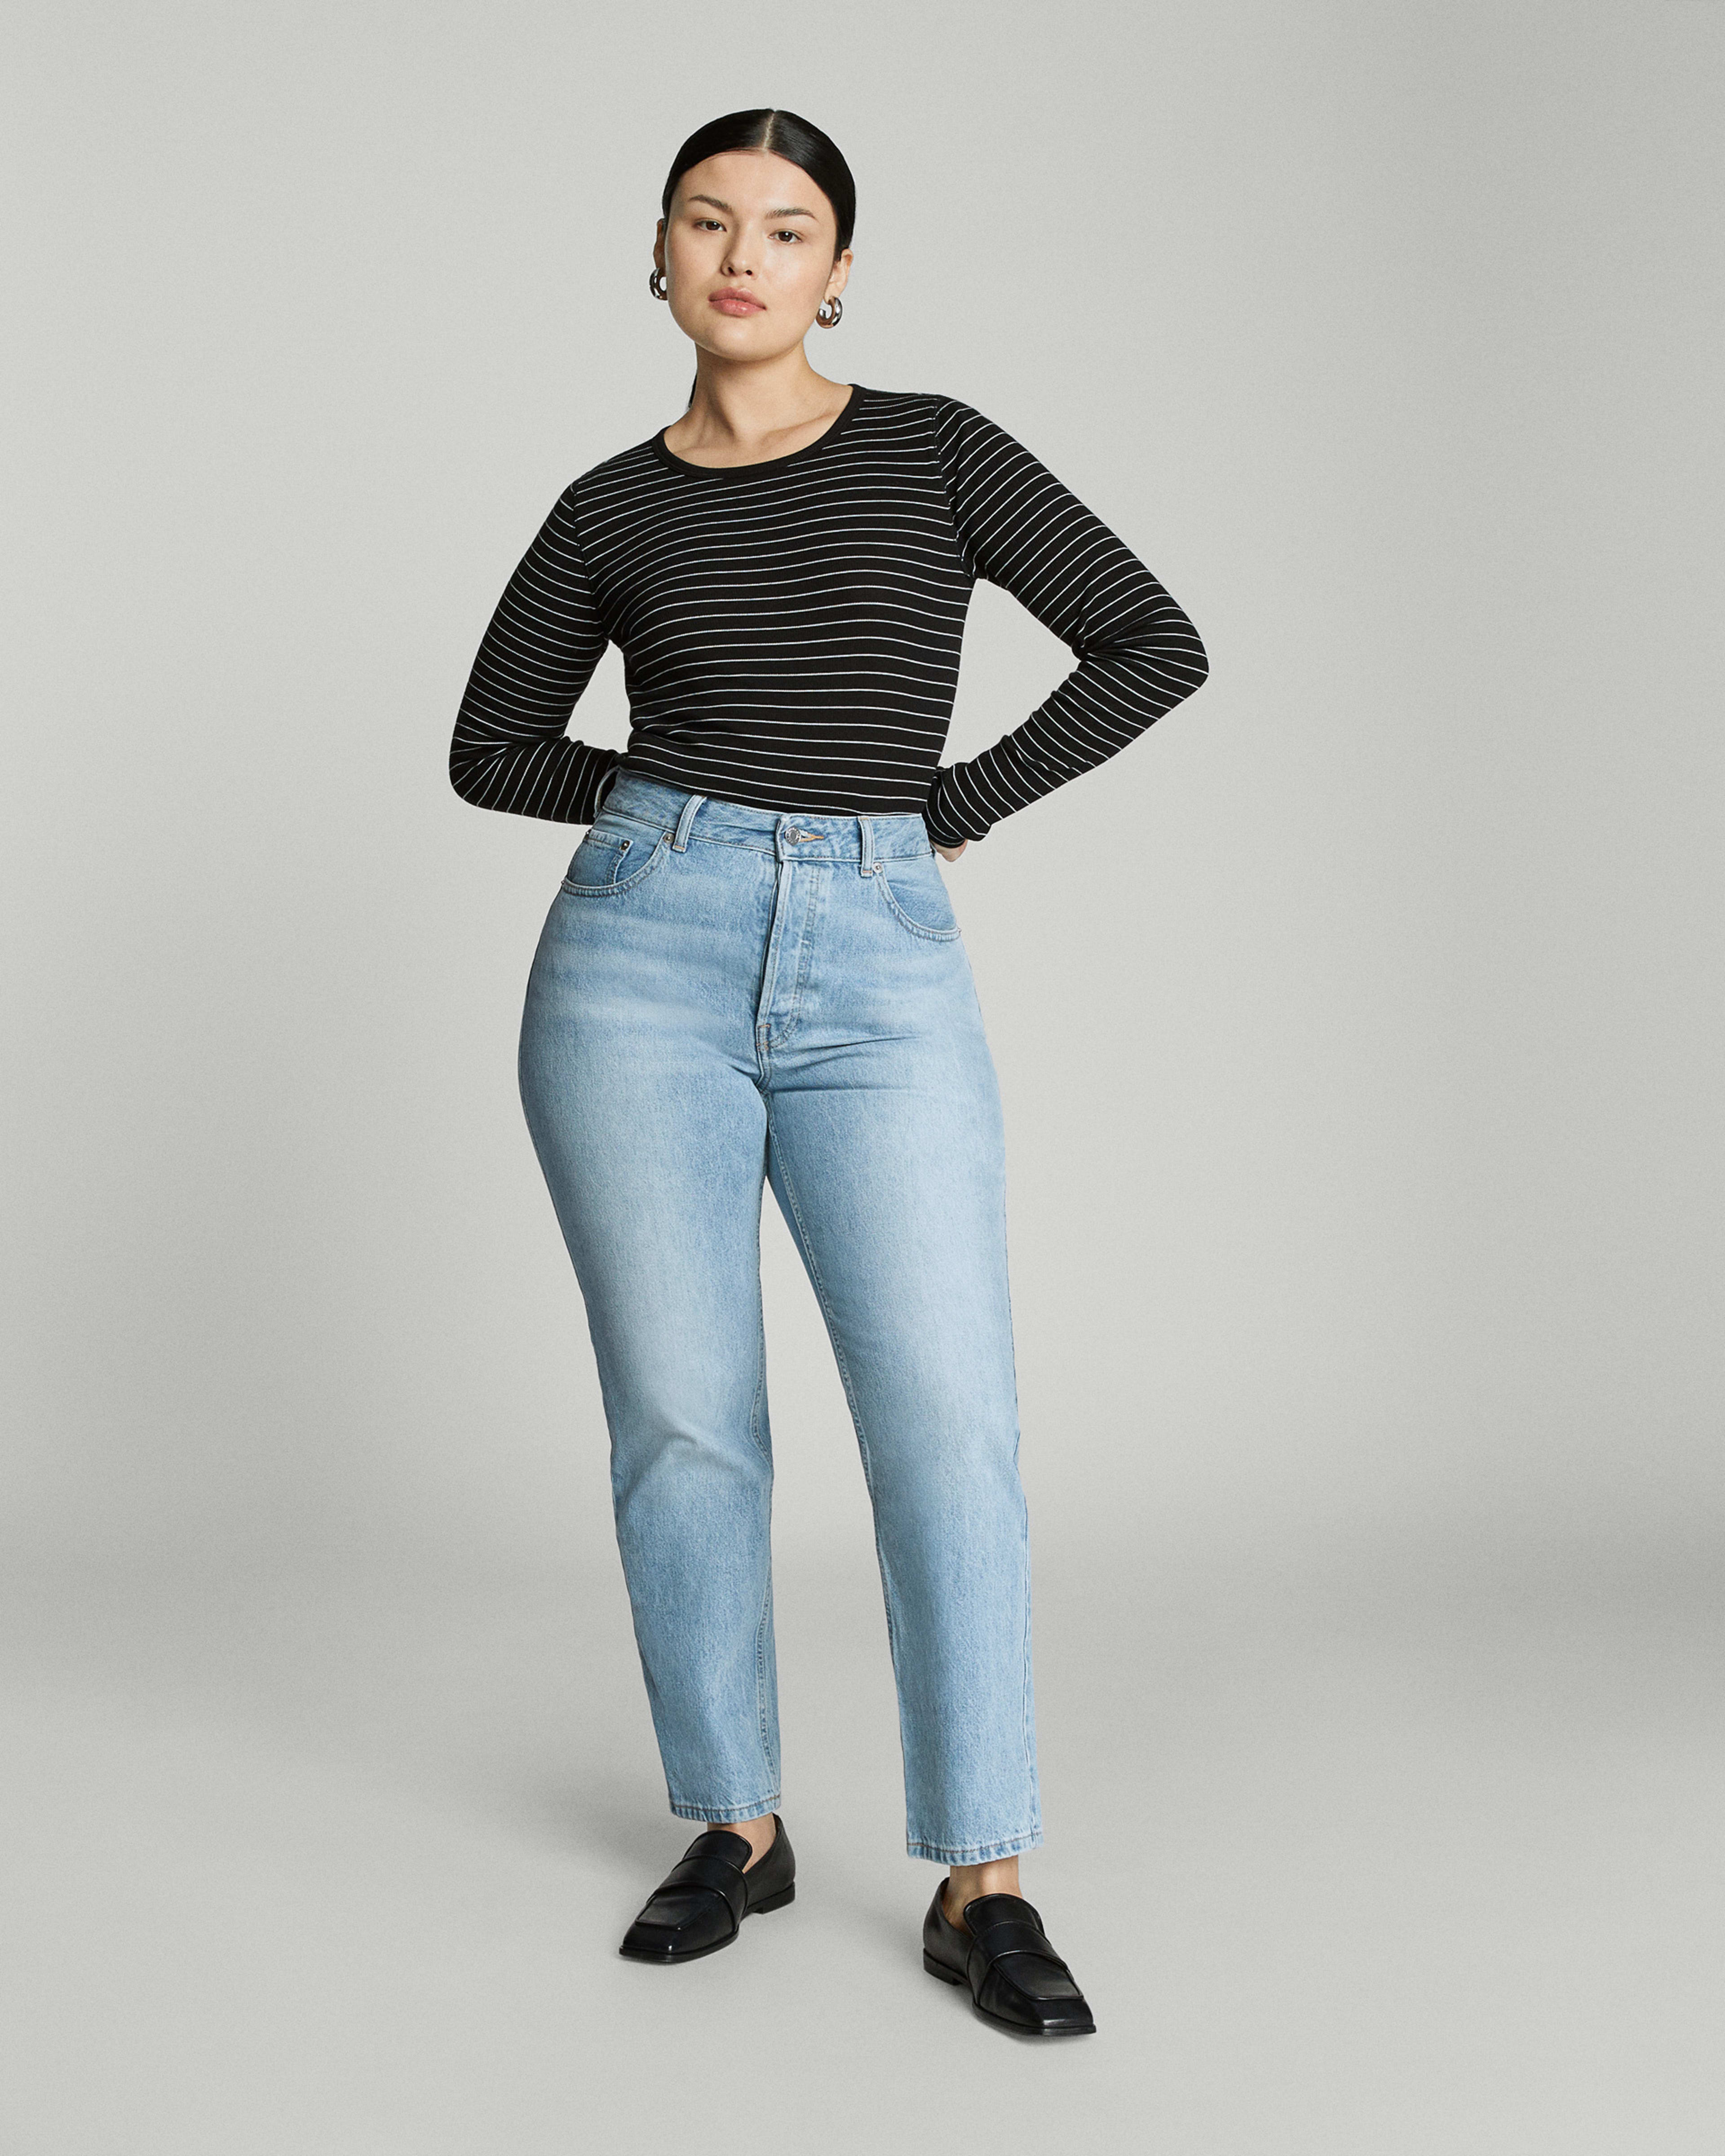 Shop Women's Curvy Fit Jeans - Jeans for Curvy Women